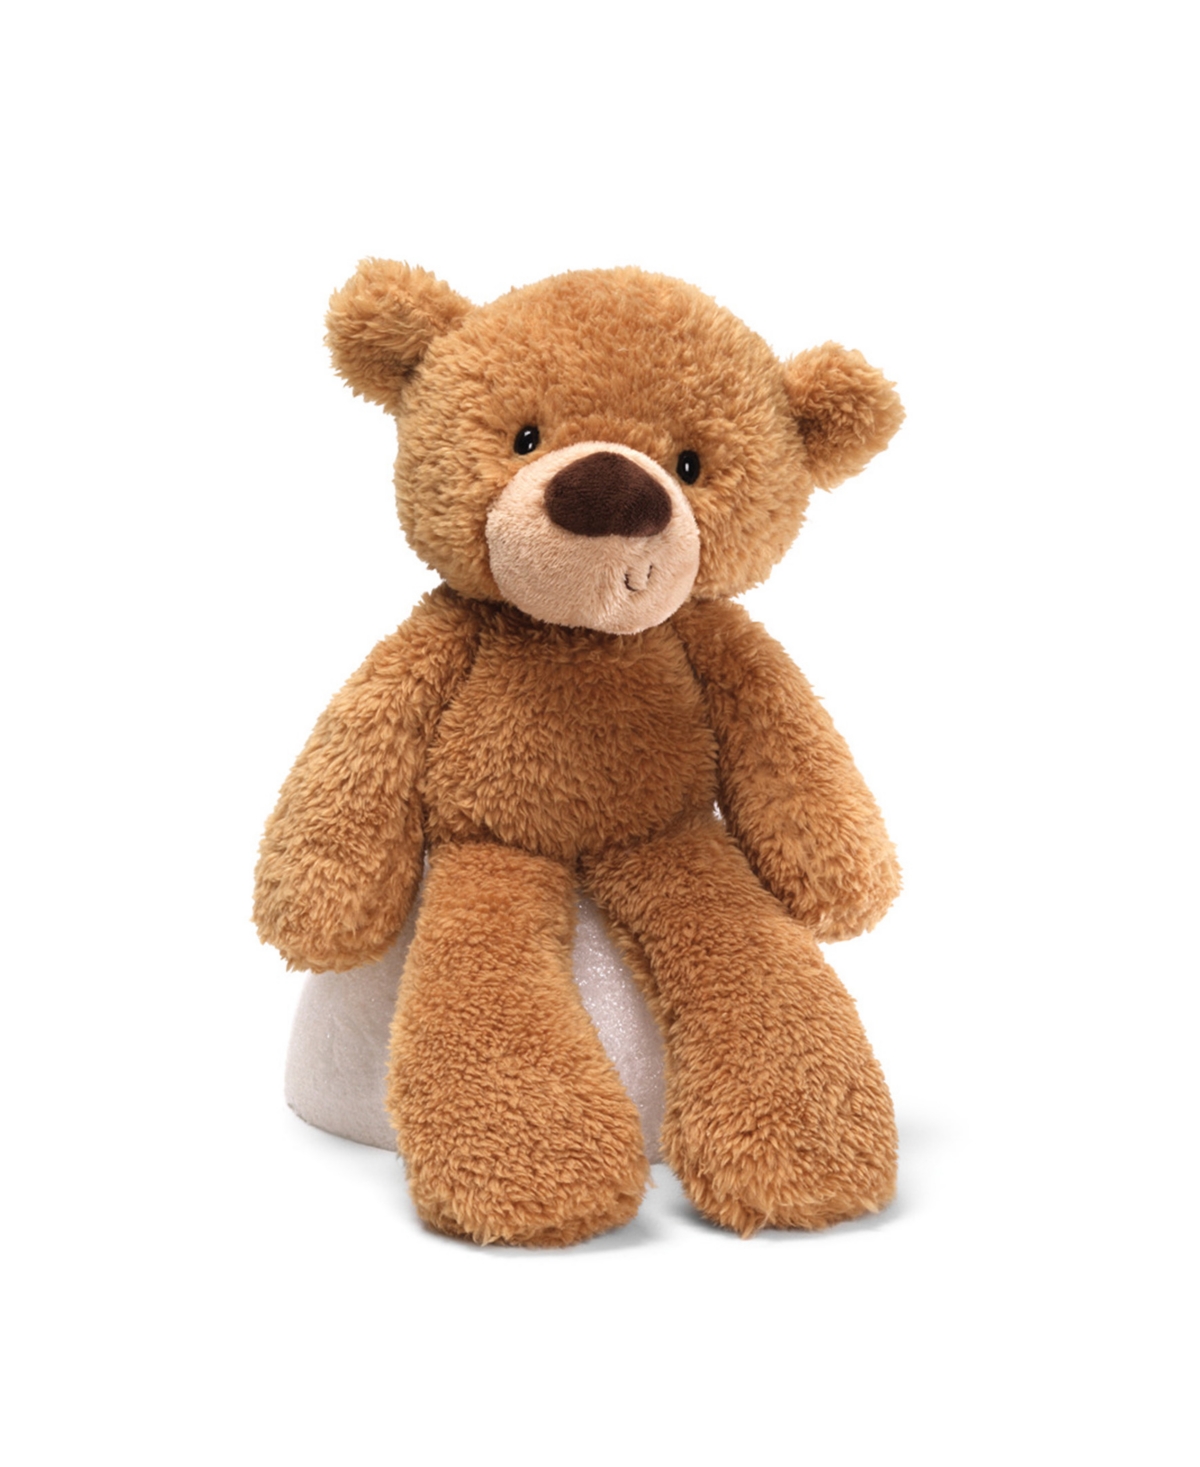 Gund Fuzzy Teddy Bear, Premium Stuffed Animal, 13.5" In Multi-color